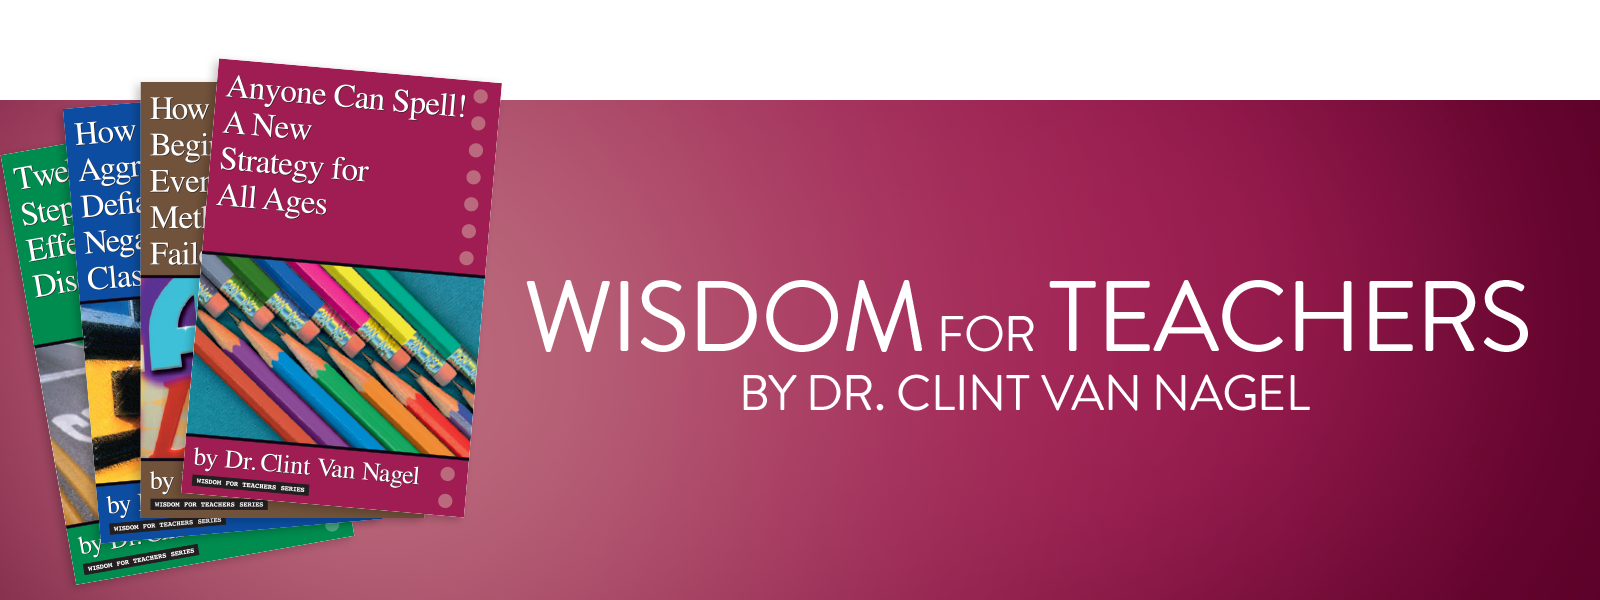 Wisdom for Teachers by Dr. Clint Van Nagel